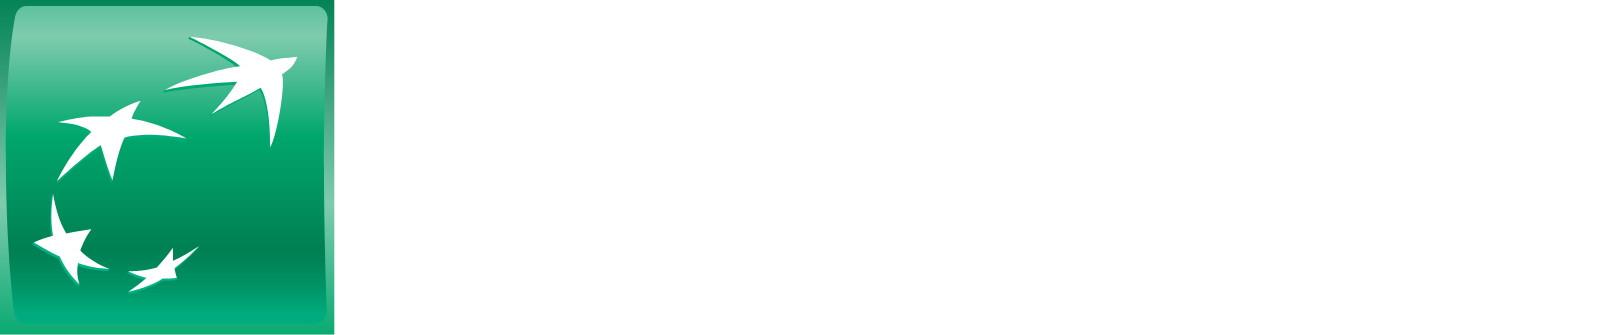 BNP Paribas Logo groß für dunkle Hintergründe (transparentes PNG)